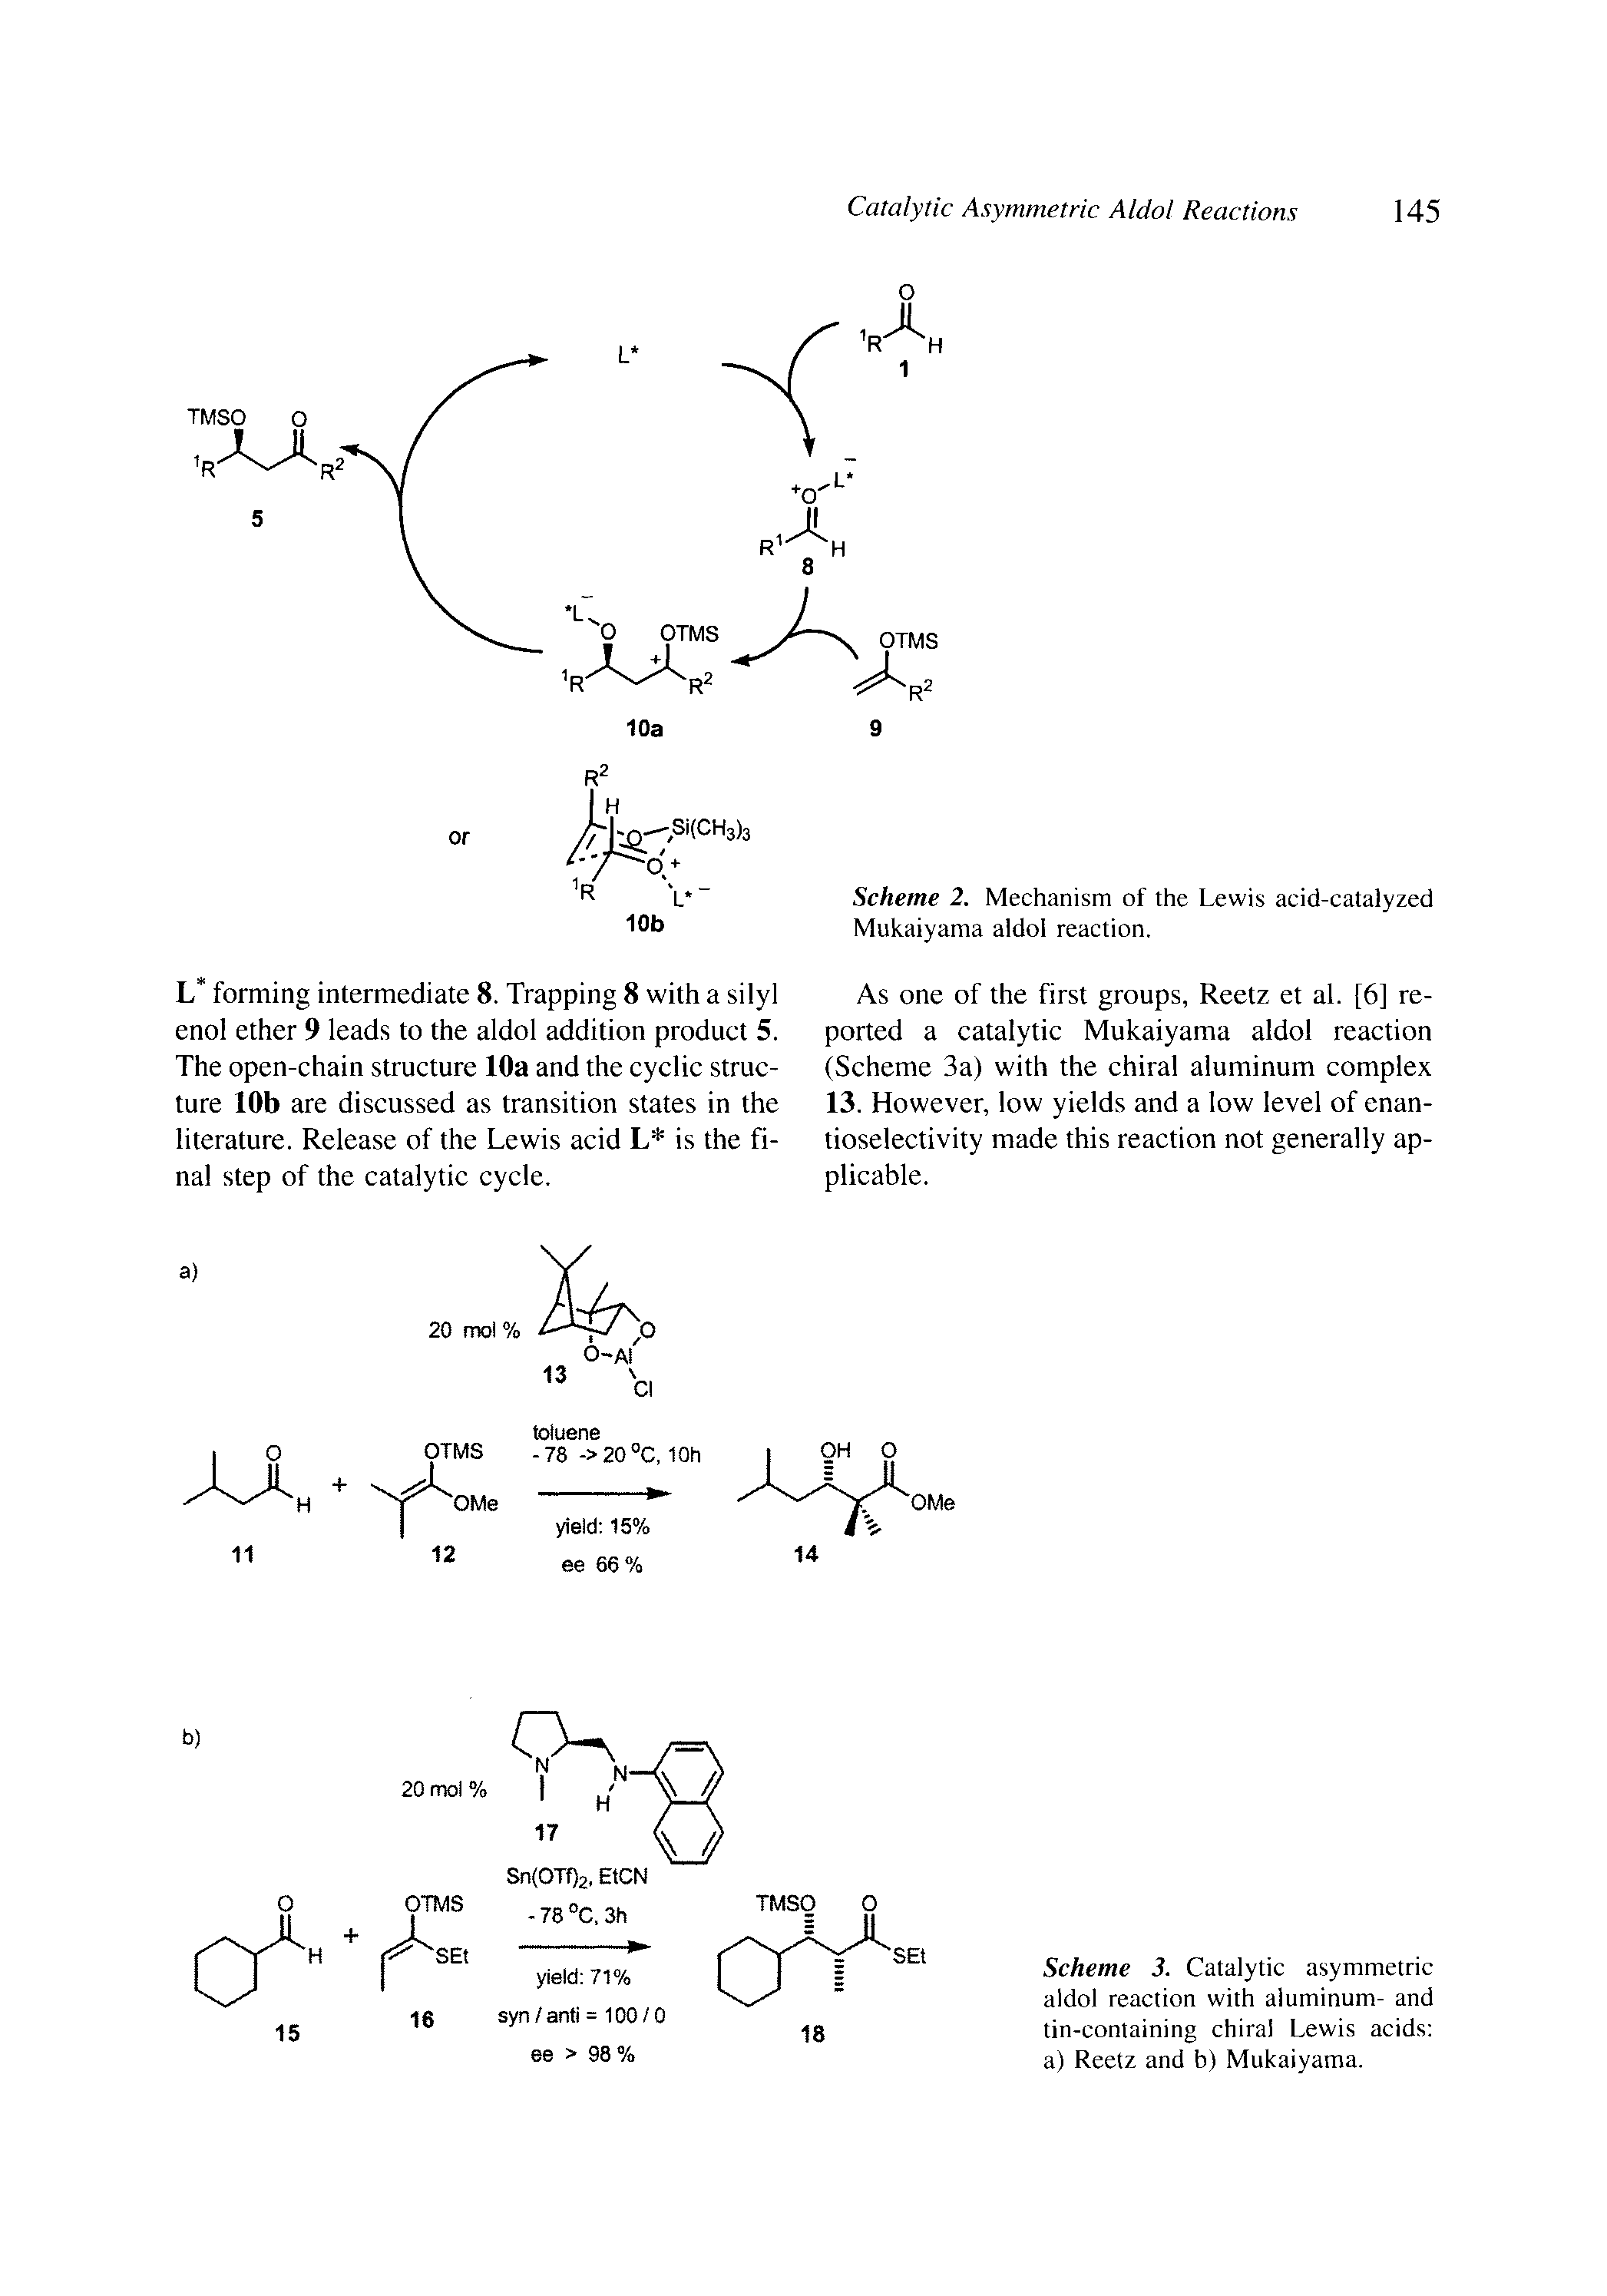 Scheme 2. Mechanism of the Lewis acid-catalyzed Mukaiyama aldol reaction.